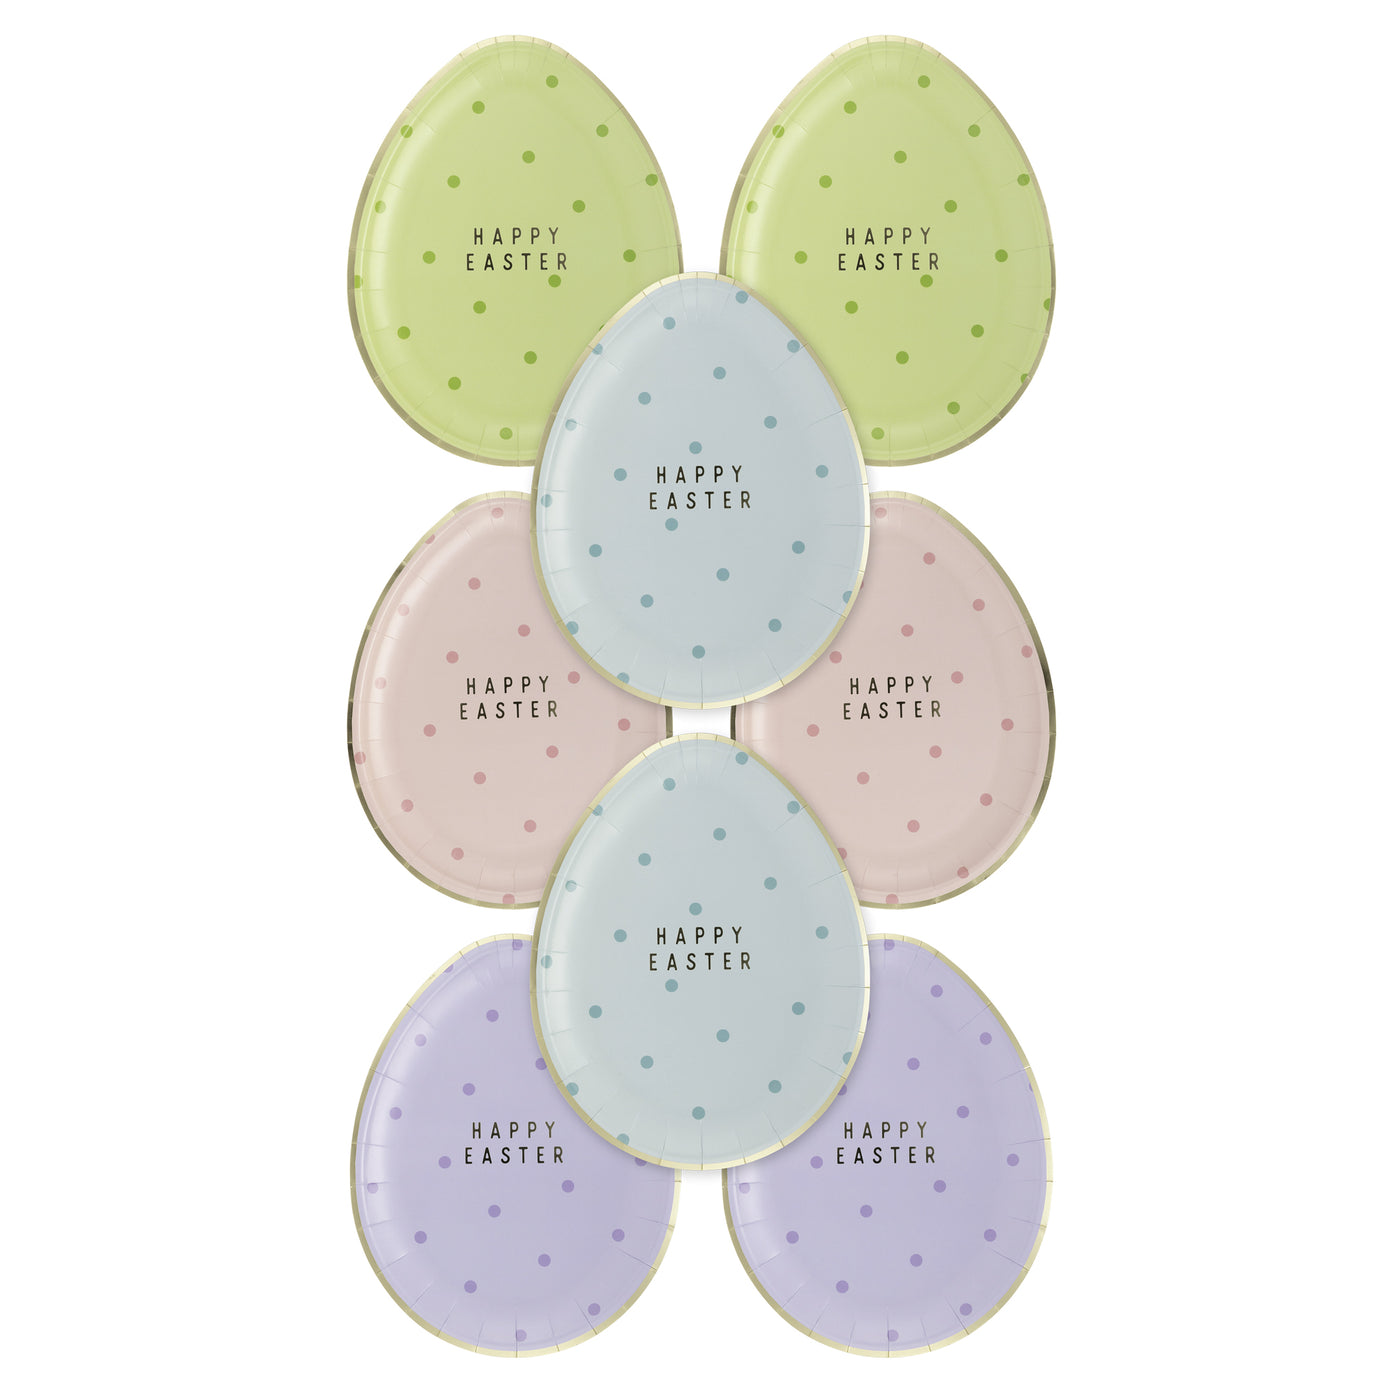 PLTS359E - Polka Dot Egg Shaped Paper Plate Set